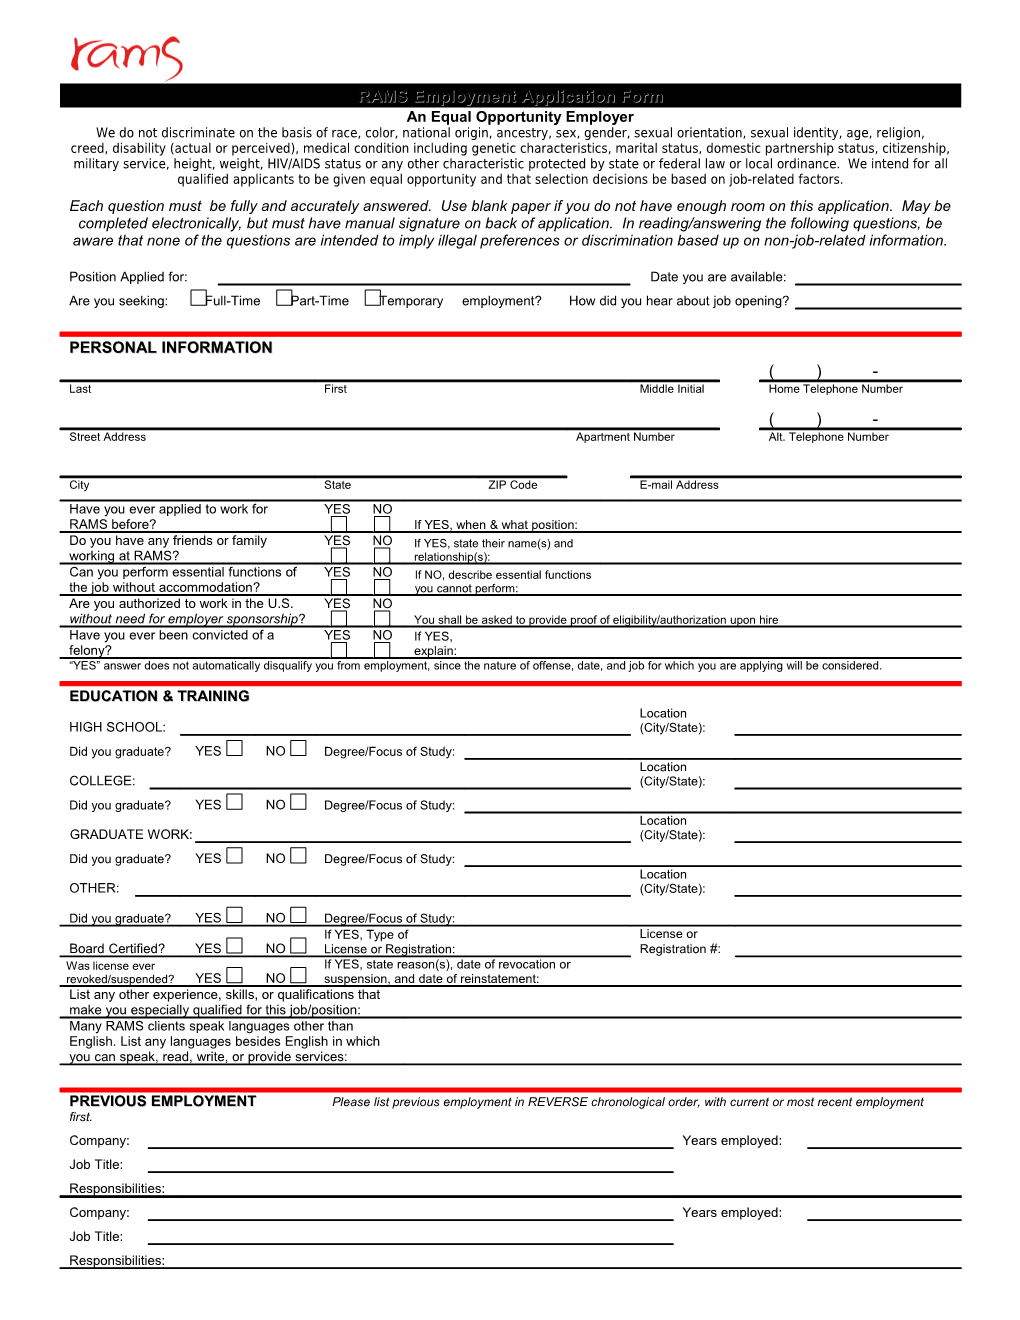 RAMS Employment Application Form